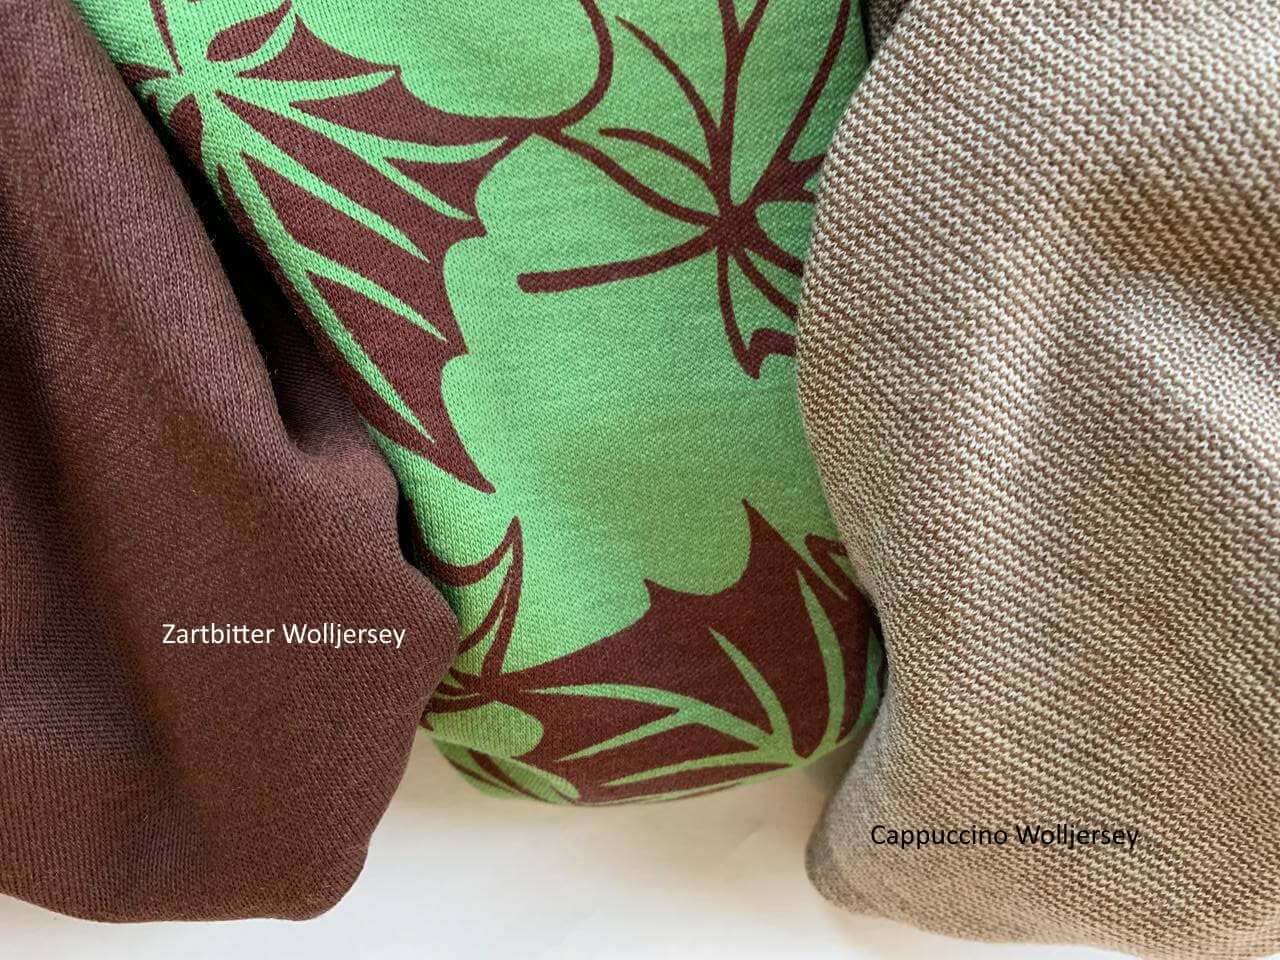 Fall Leaves (Thicker) Organic Wool Jersey in Avocado Guacamole (Merino, kbt, mulesingf